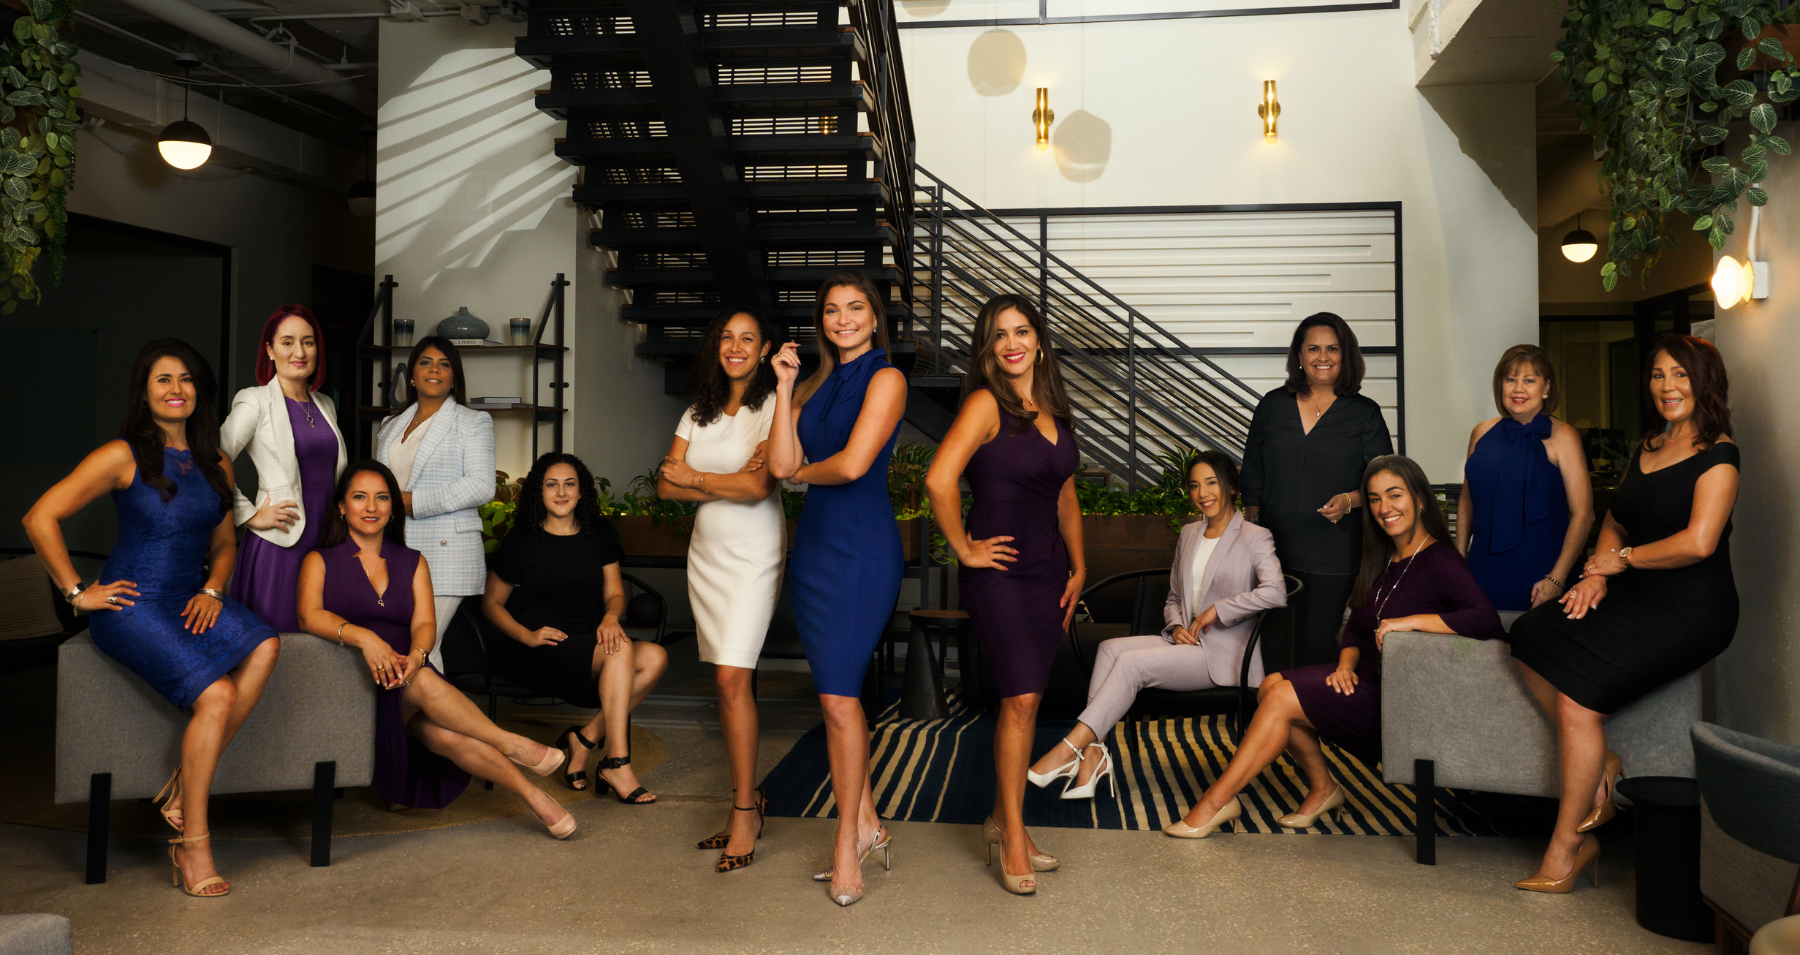 Hispanic Professional Women's Association - Tampa